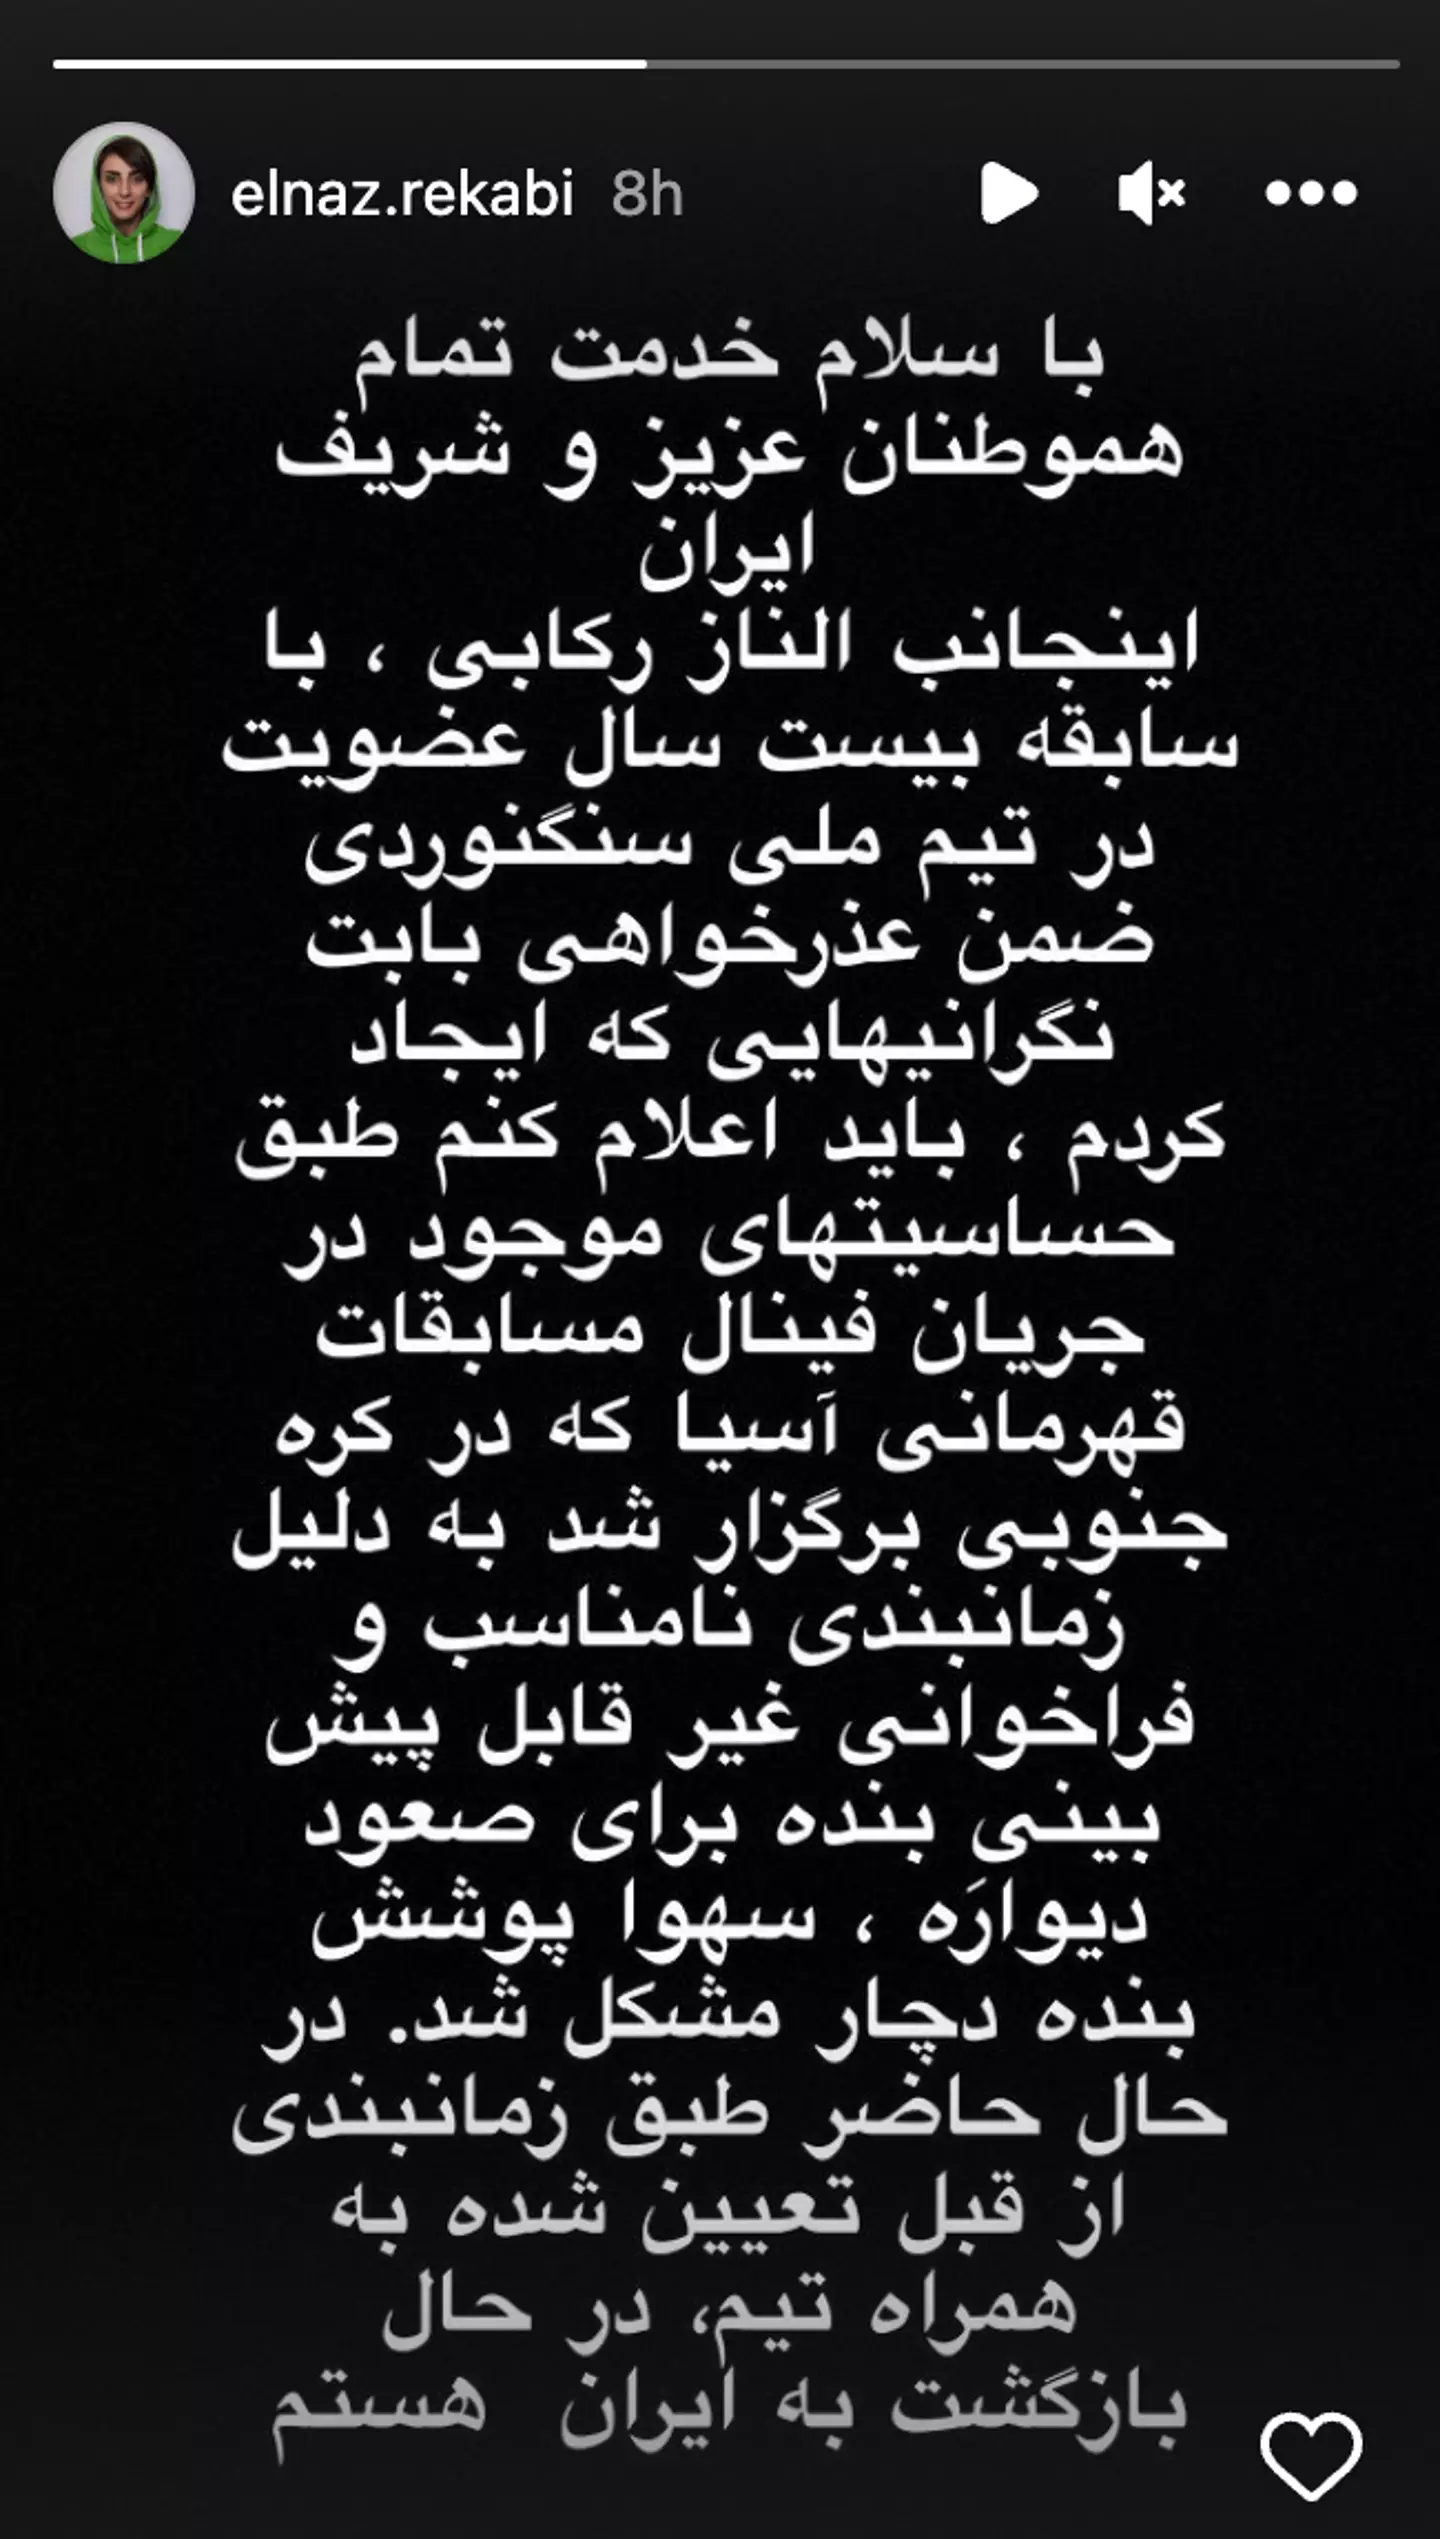 The post on Rekabi's social media. Image: Instagram